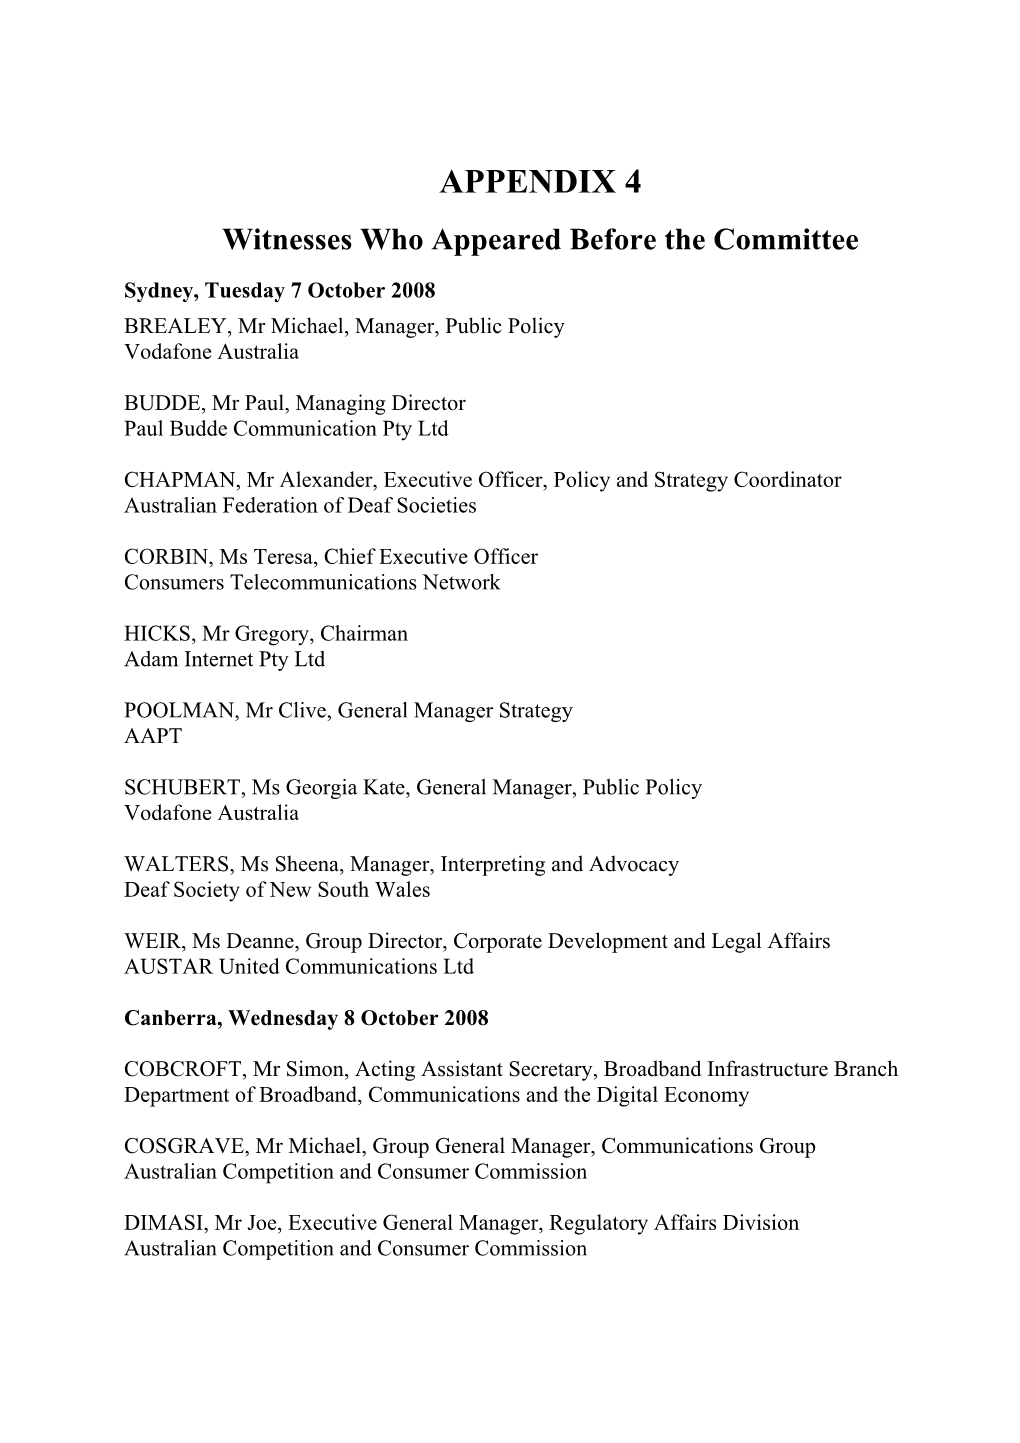 Interim Report: Senate Select Committee on the National